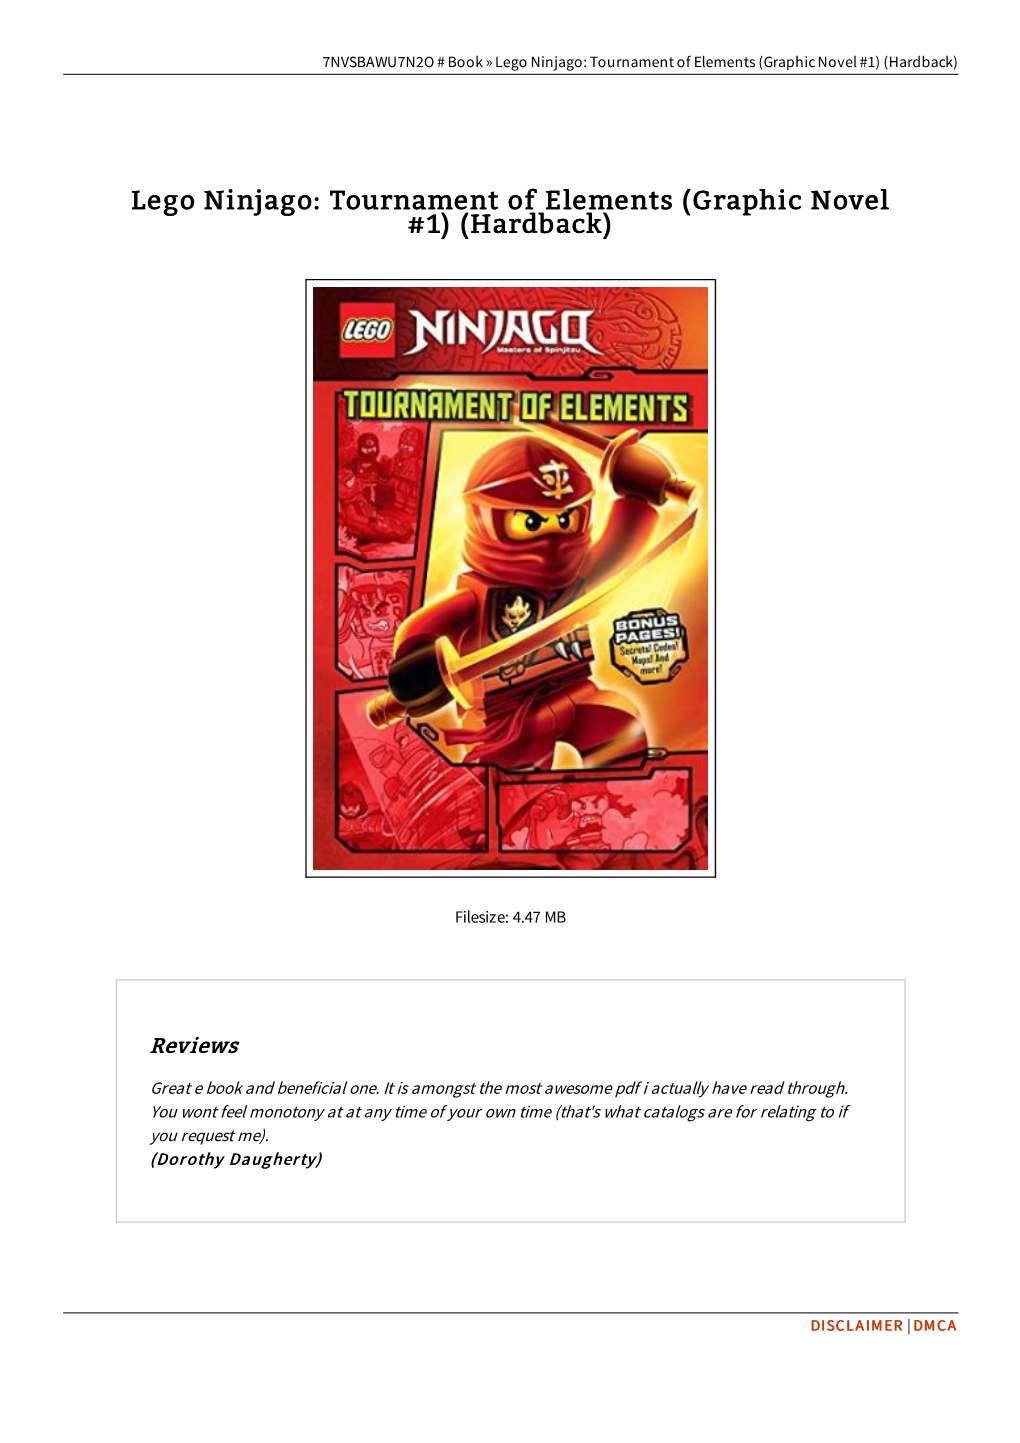 Read Book # Lego Ninjago: Tournament of Elements (Graphic